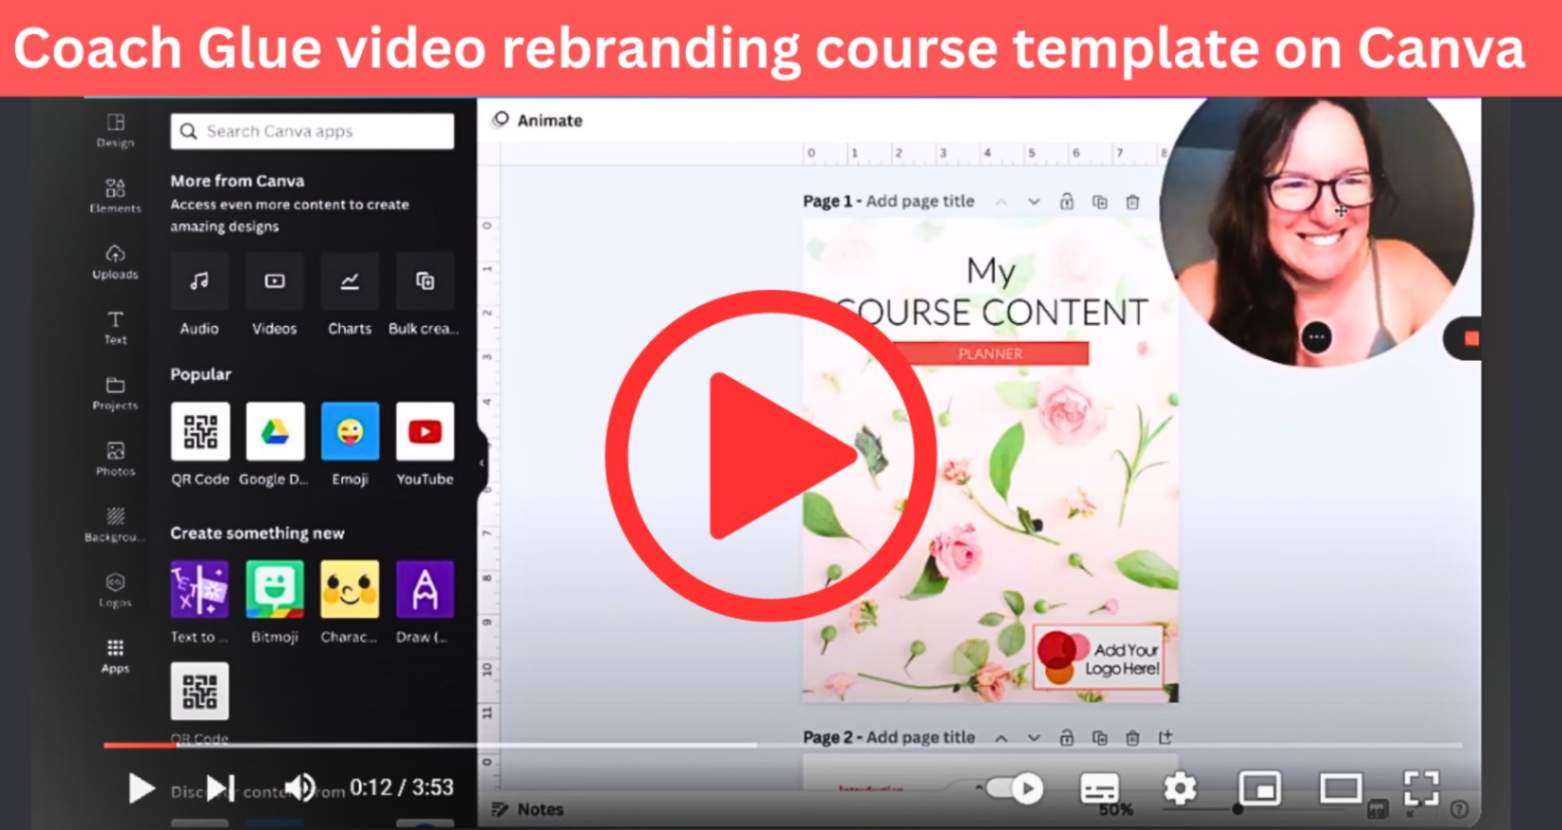 Coach Glue video rebranding course template on Canva